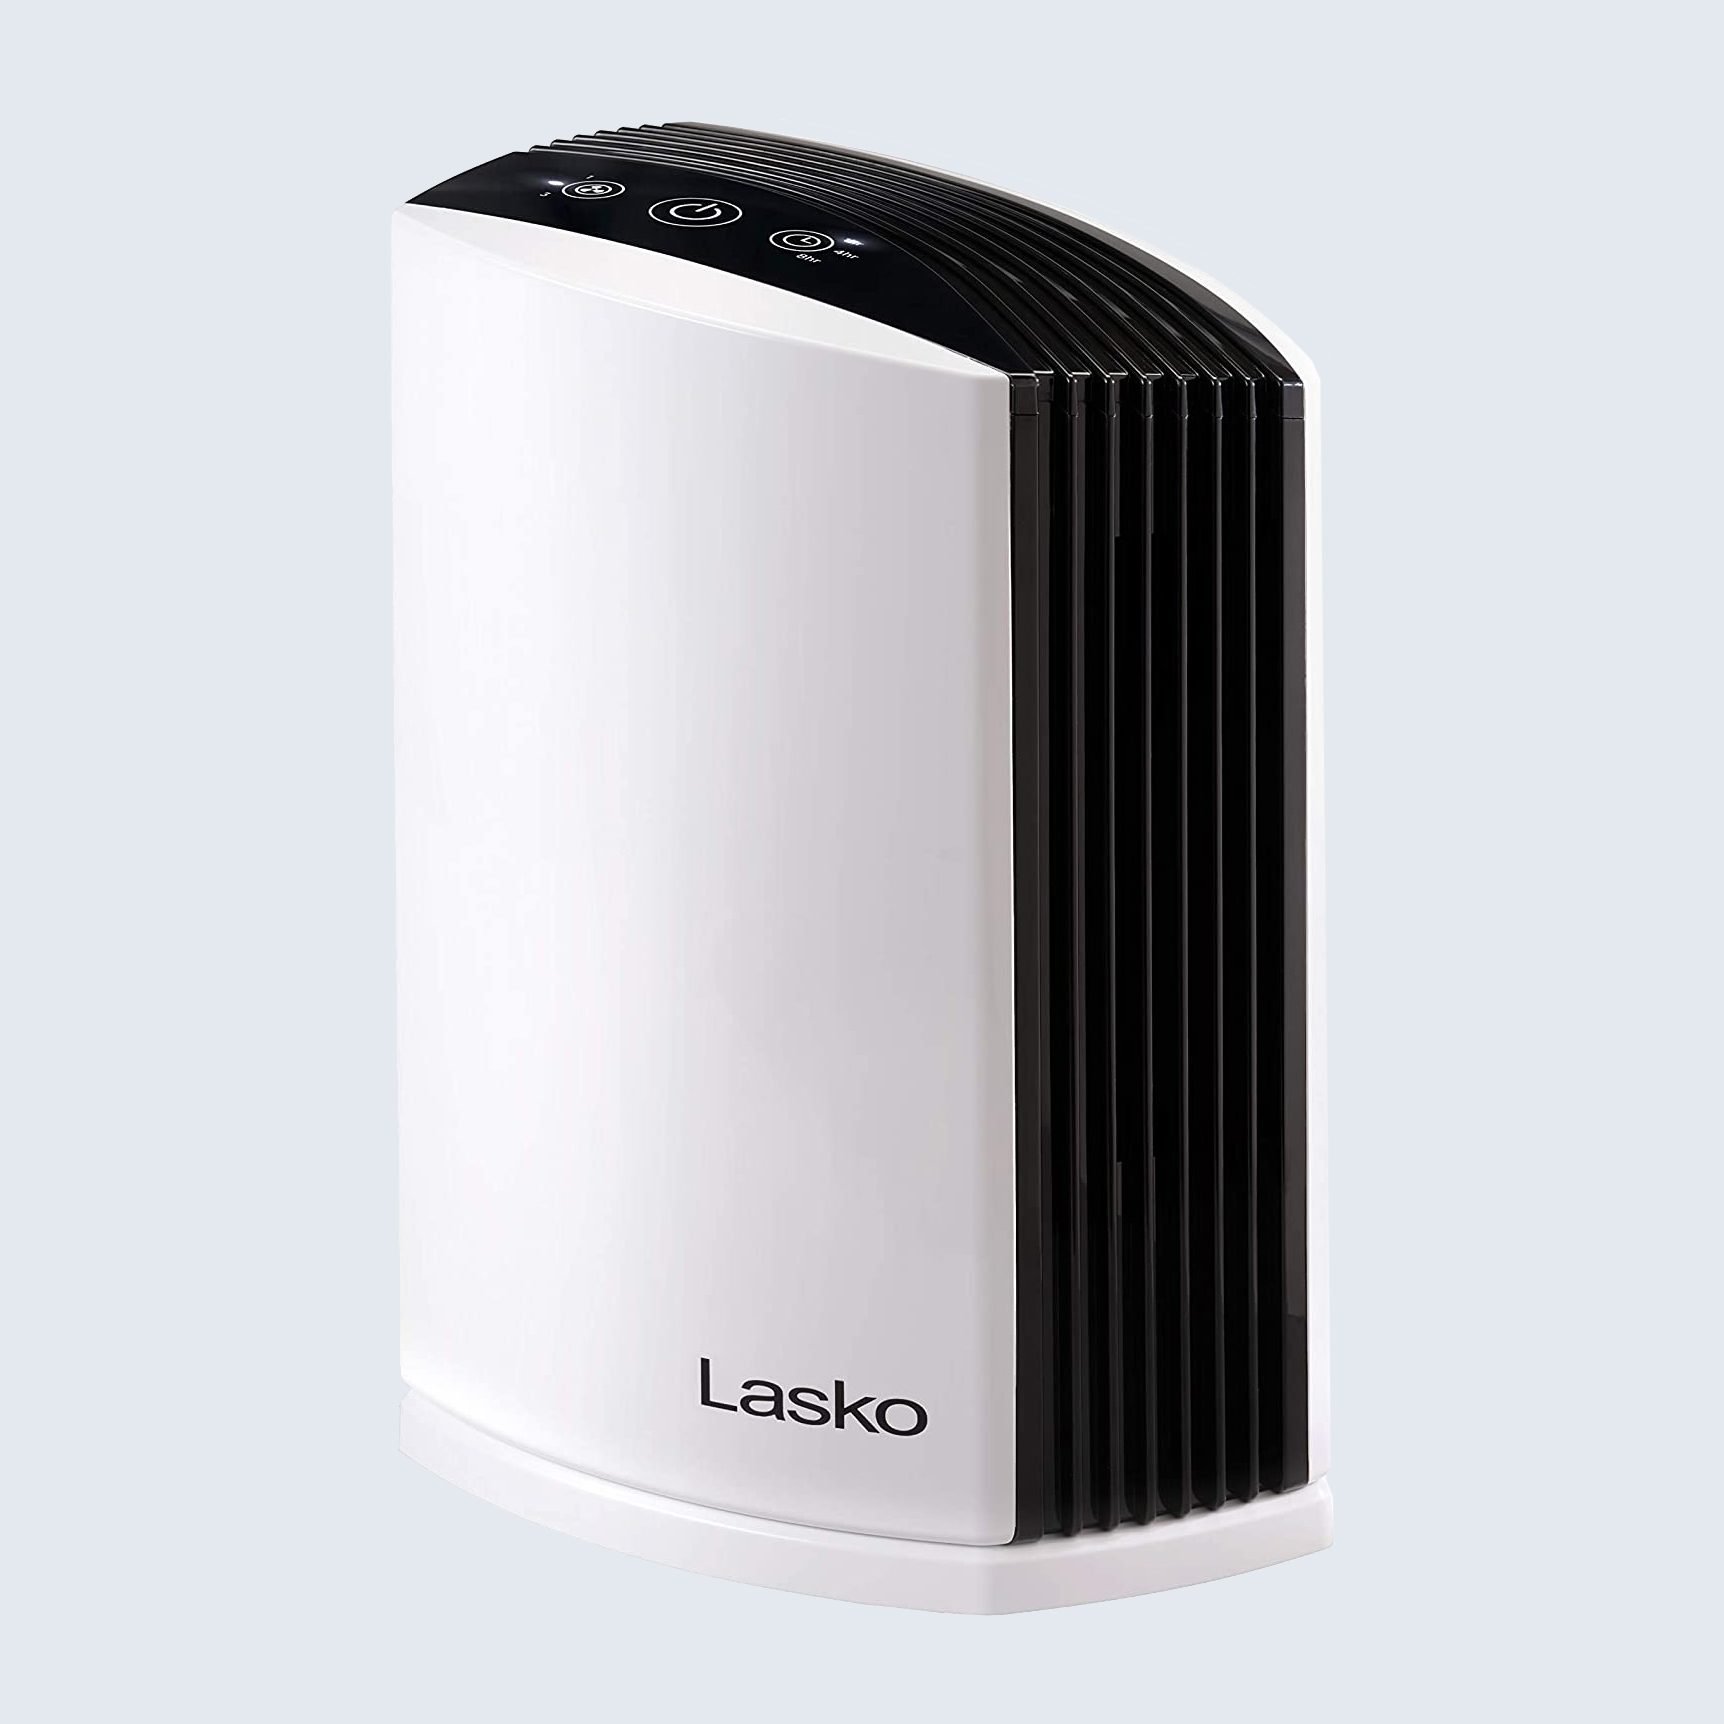 Lasko HEPA Filter Desktop Air Purifier